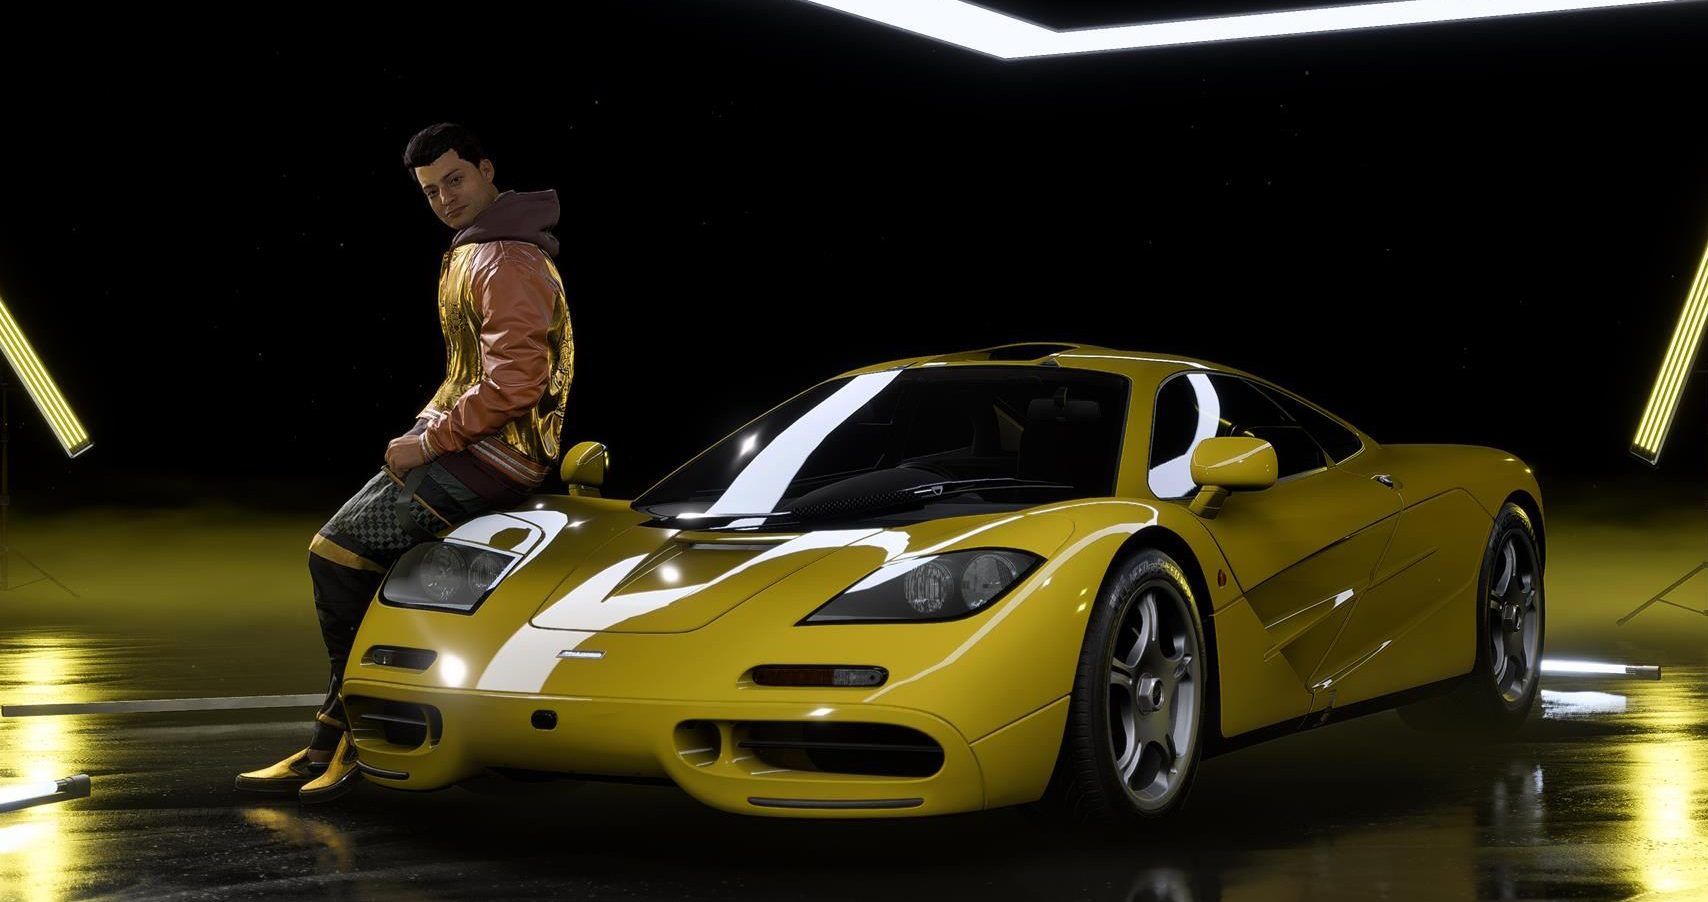 The original Need for Speed: Underground deserves a remaster